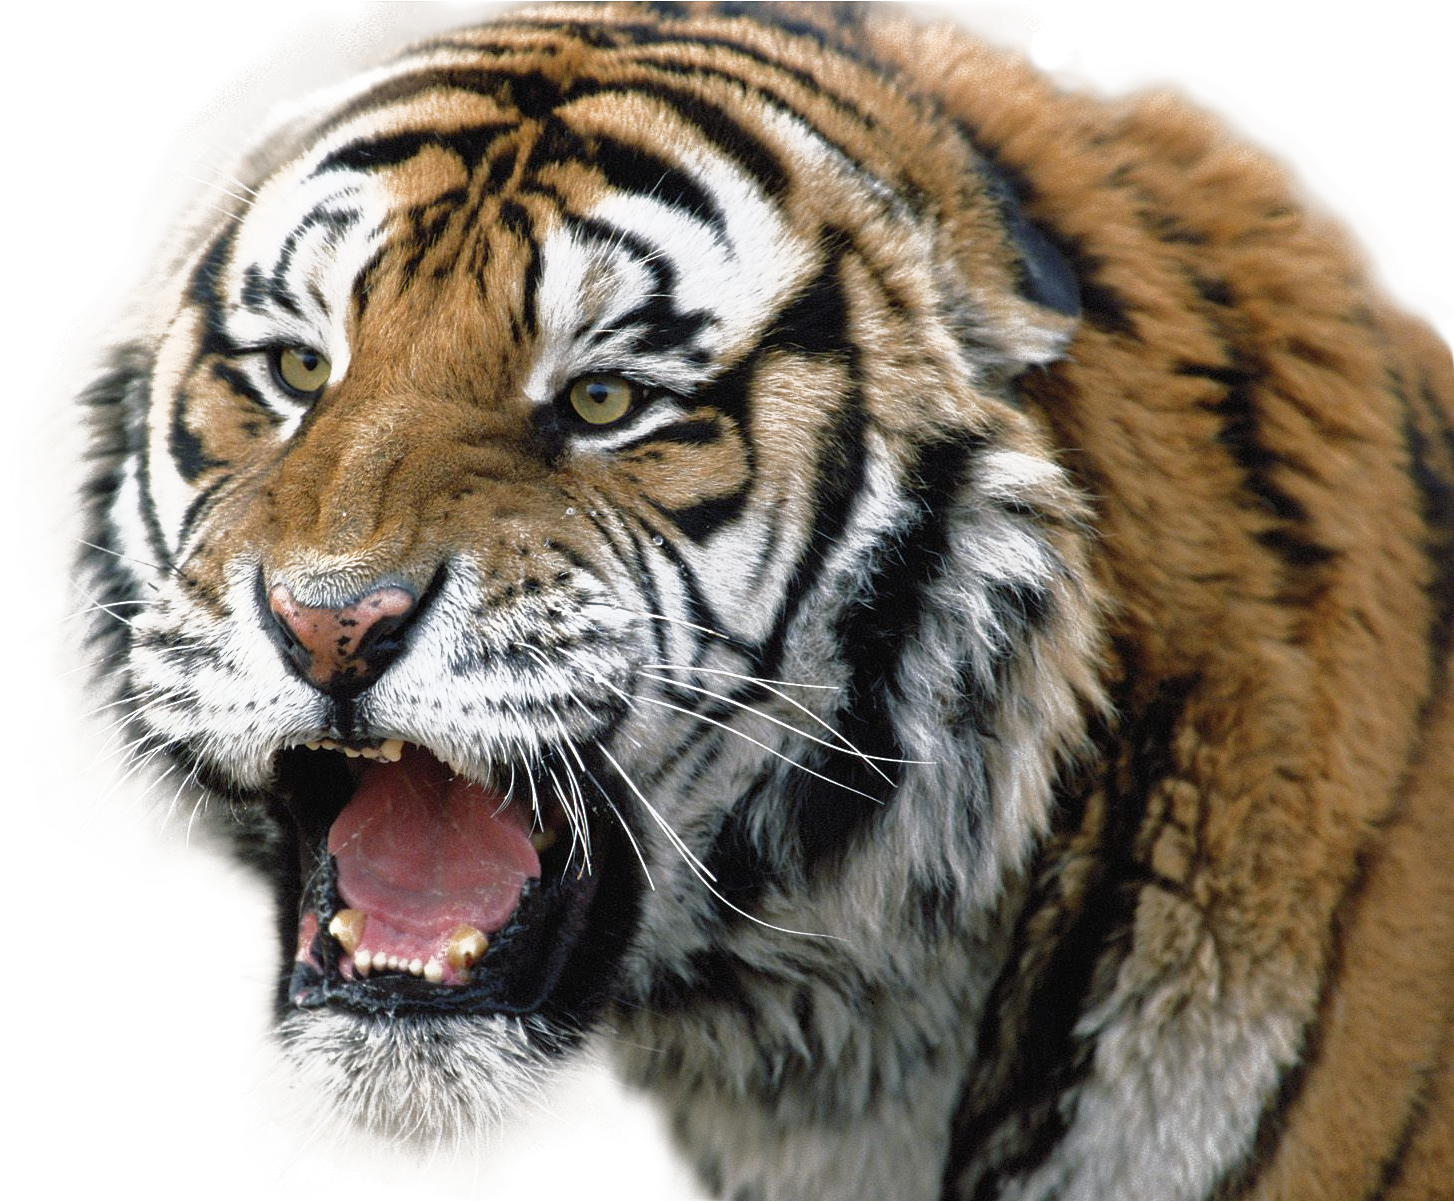 Fierce Tiger Growling PNG image